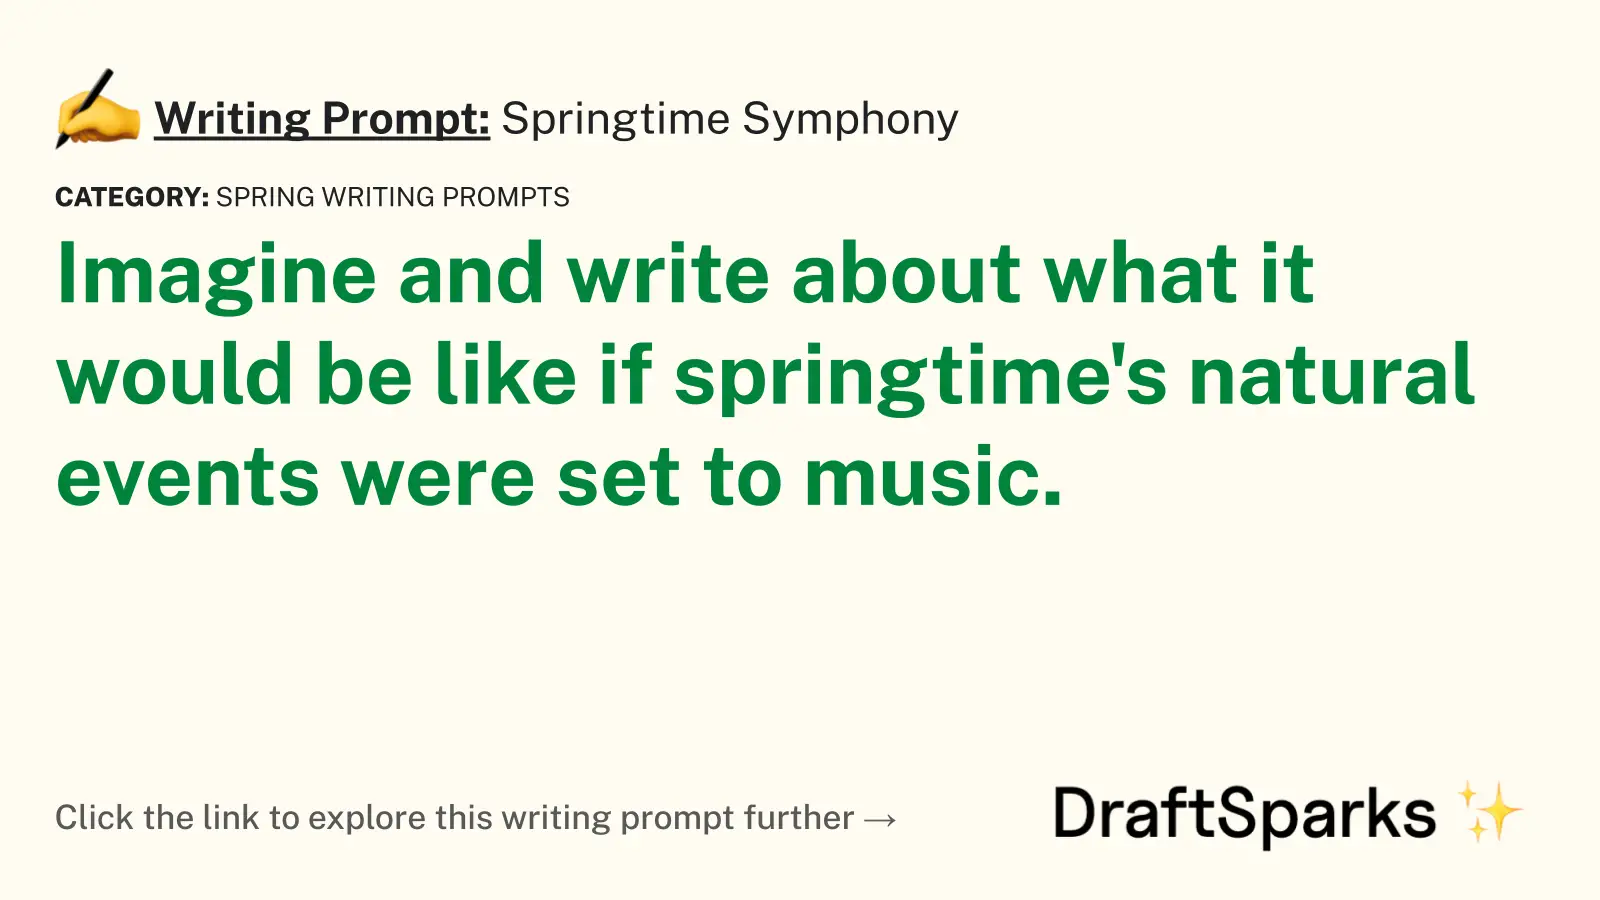 Springtime Symphony